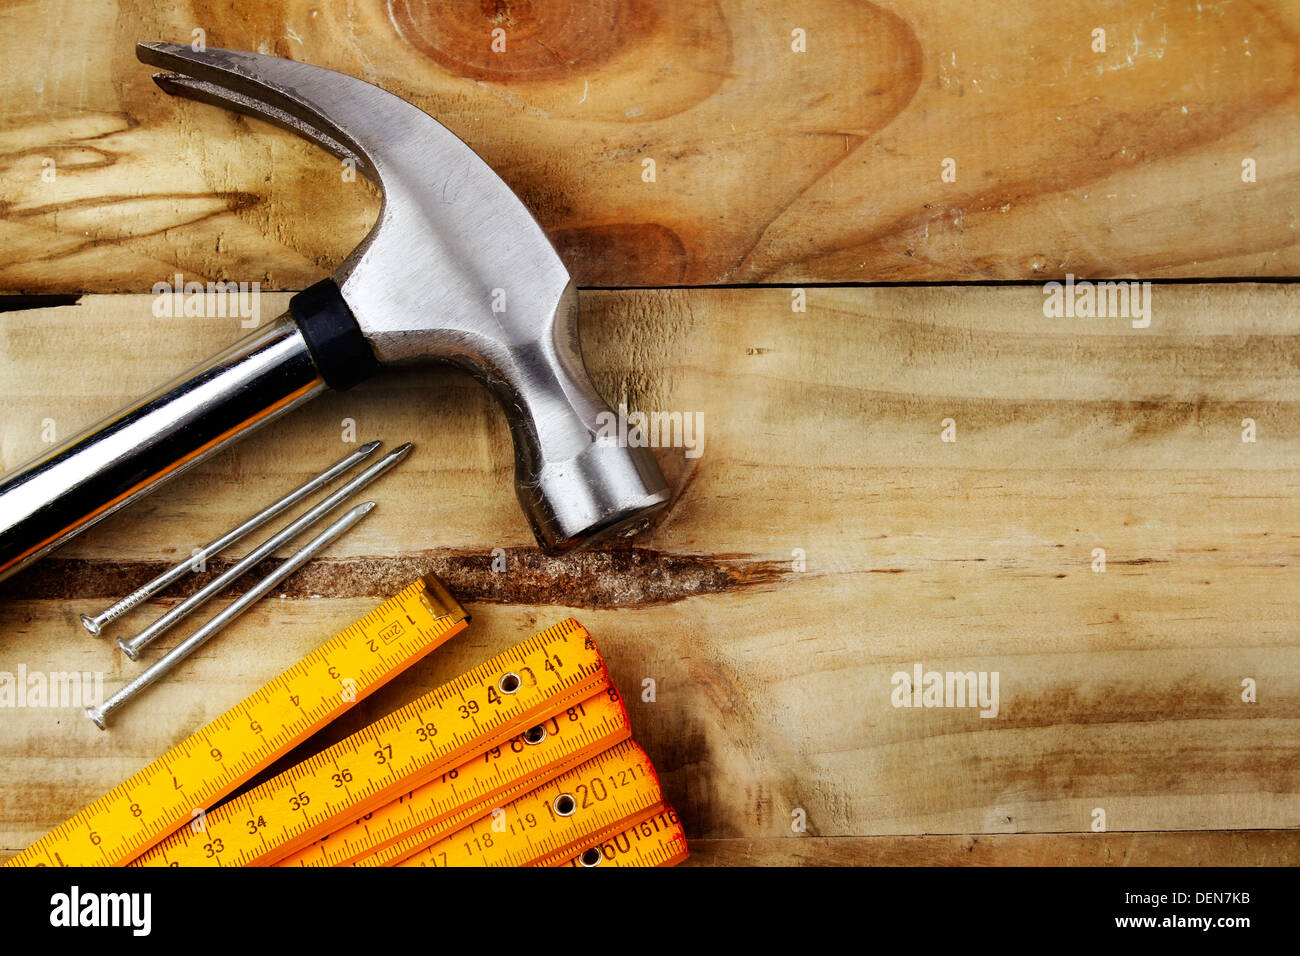 Nails, hammer and folding ruler Stock Photo